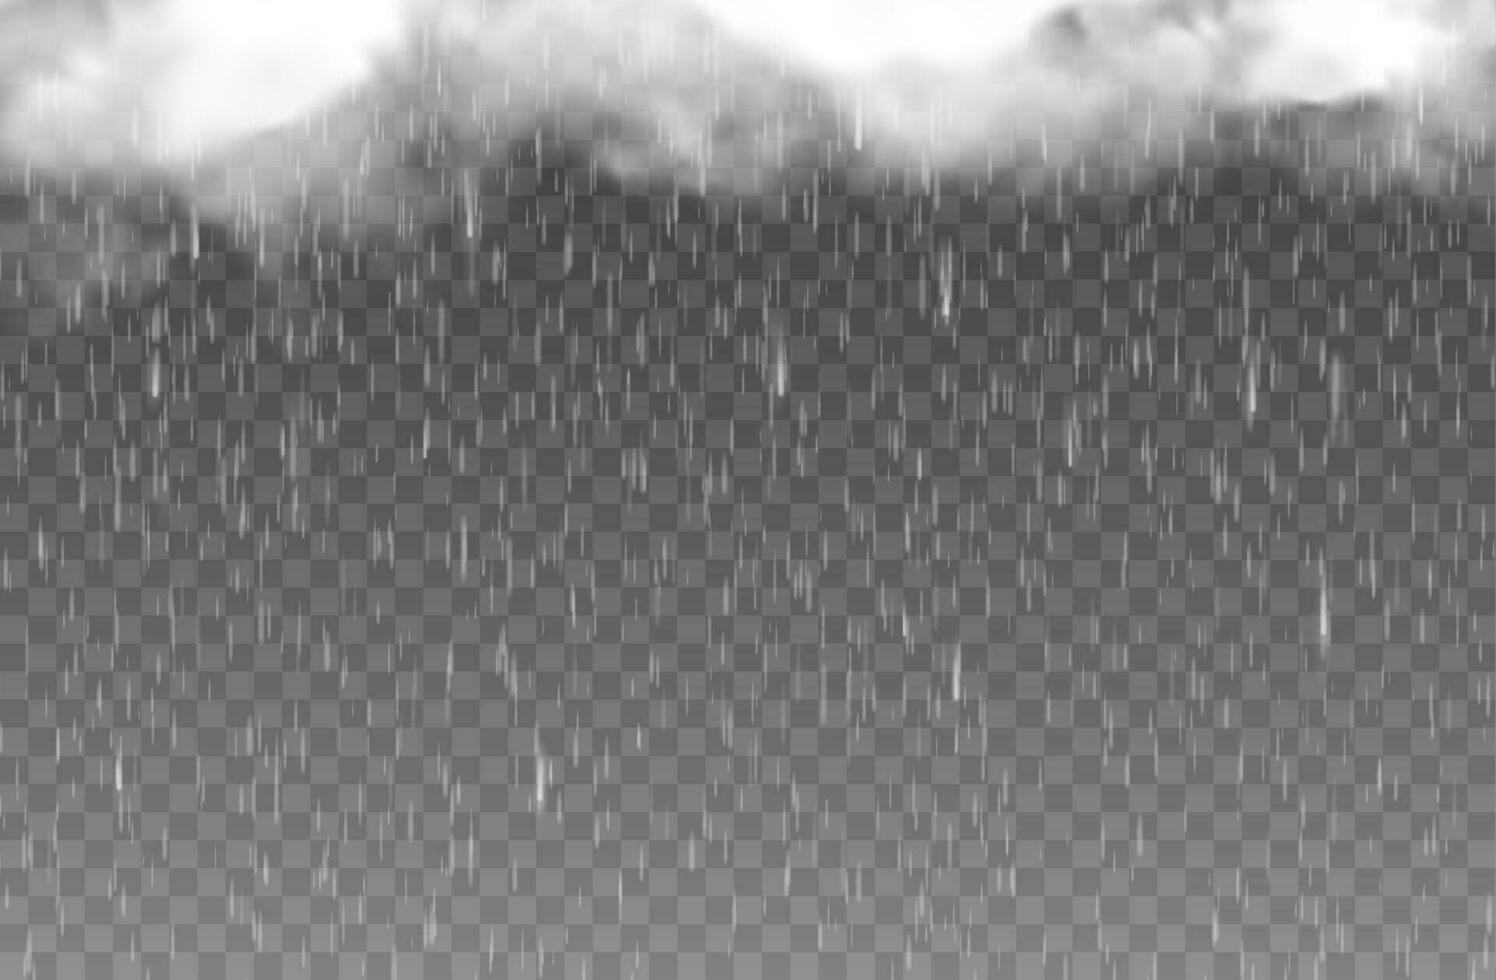 regenval water druppels en bewolkt lucht achtergrond vector